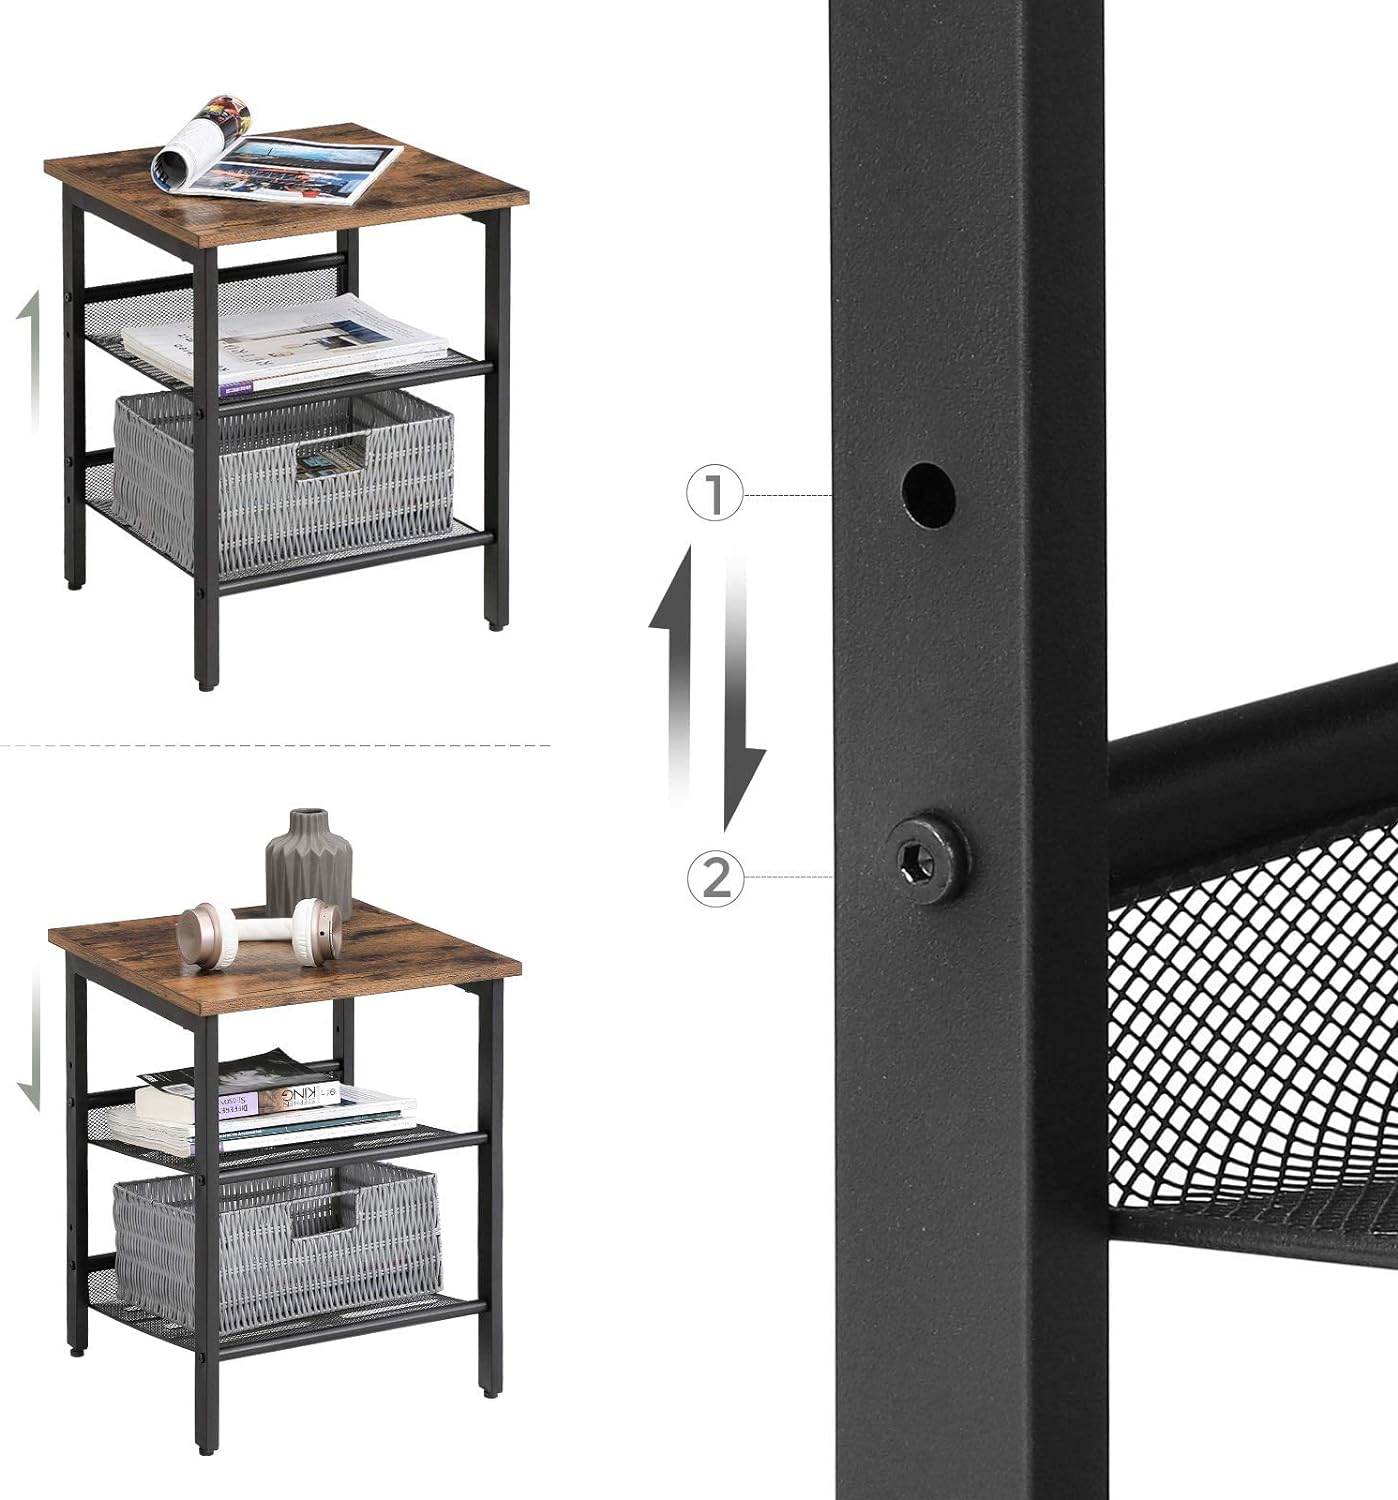 VASAGLE Side Table Set Nightstand Industrial Set of 2 Bedside Tables with Adjustable Mesh Shelves Rustic Brown and Black